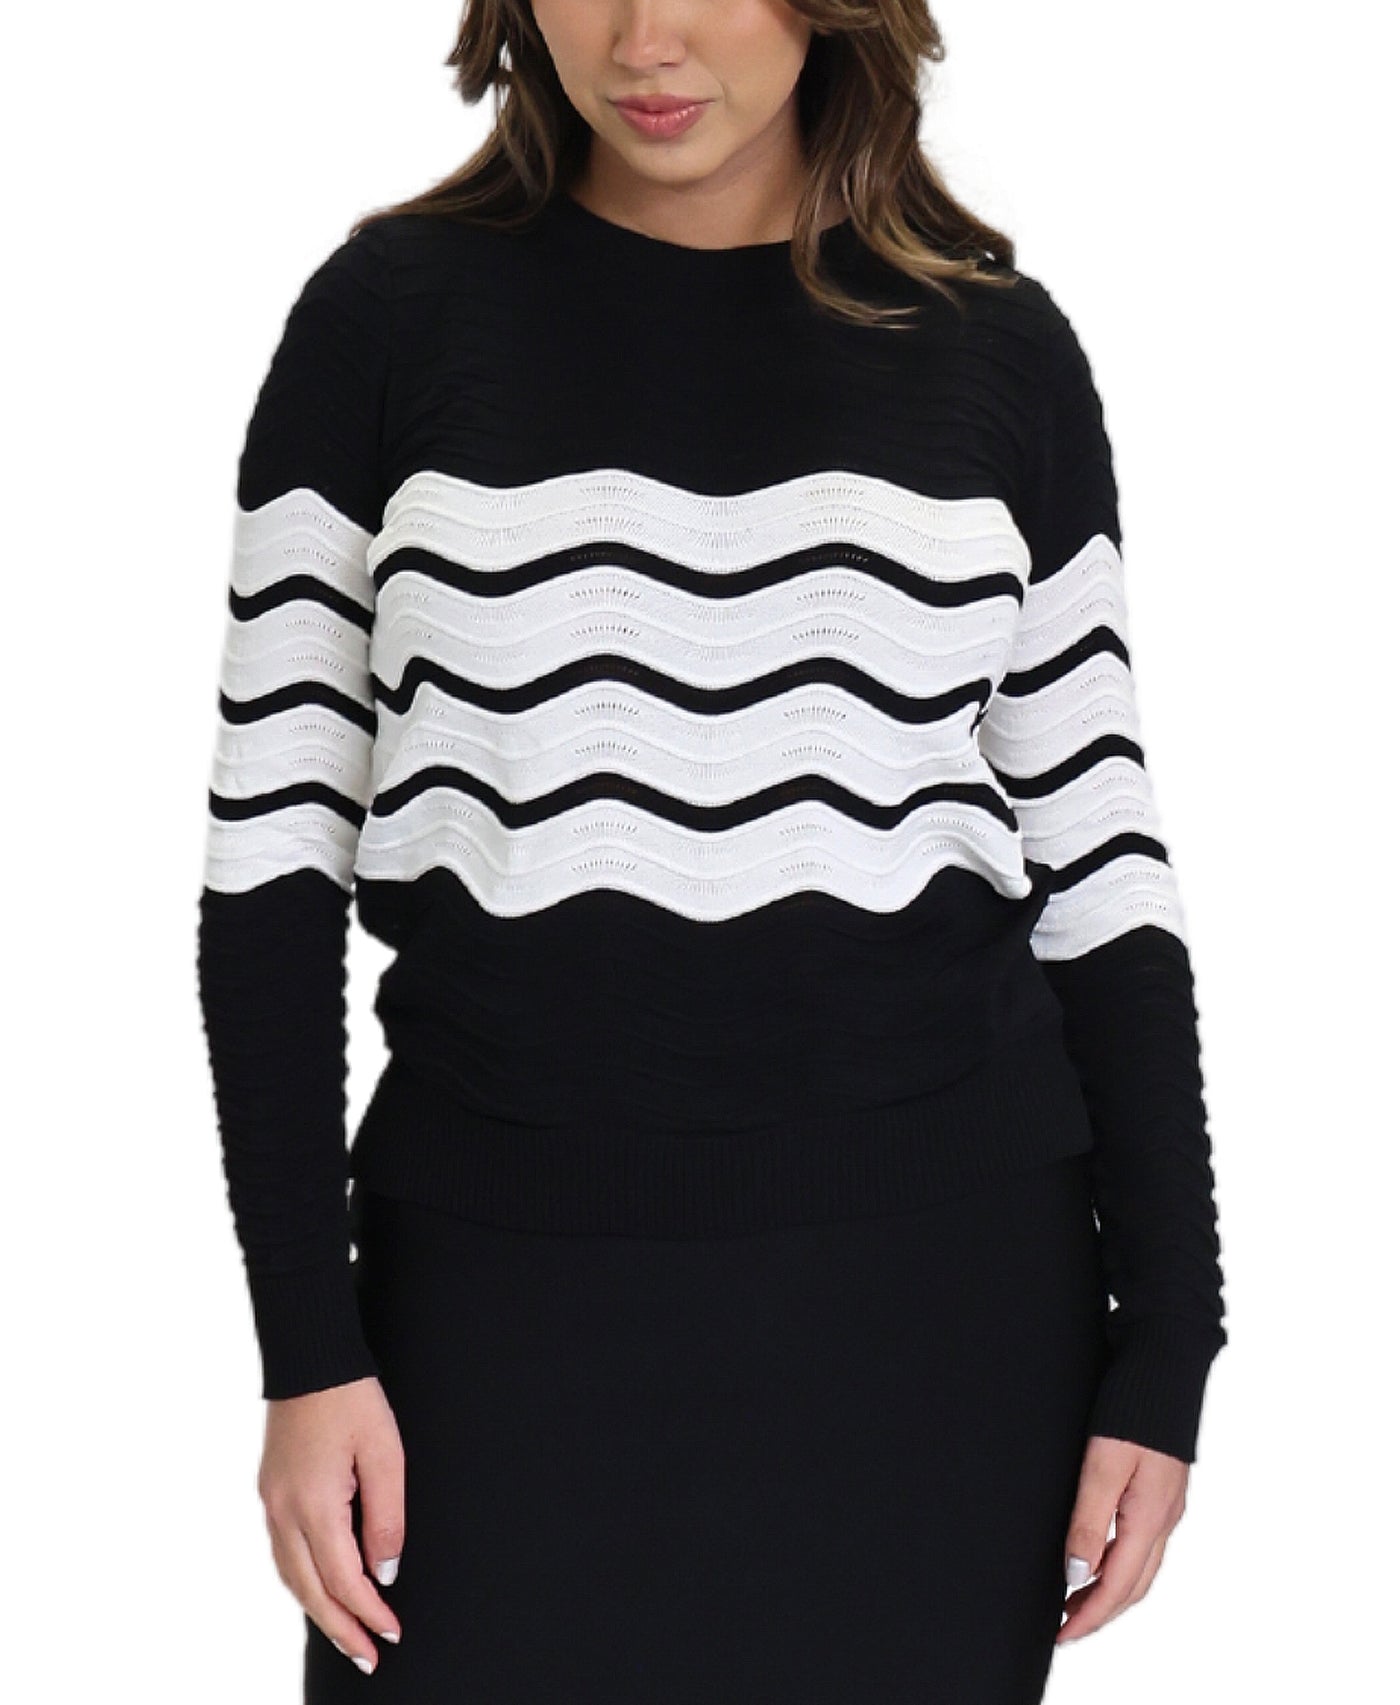 Wavy Stripe Sweater image 1